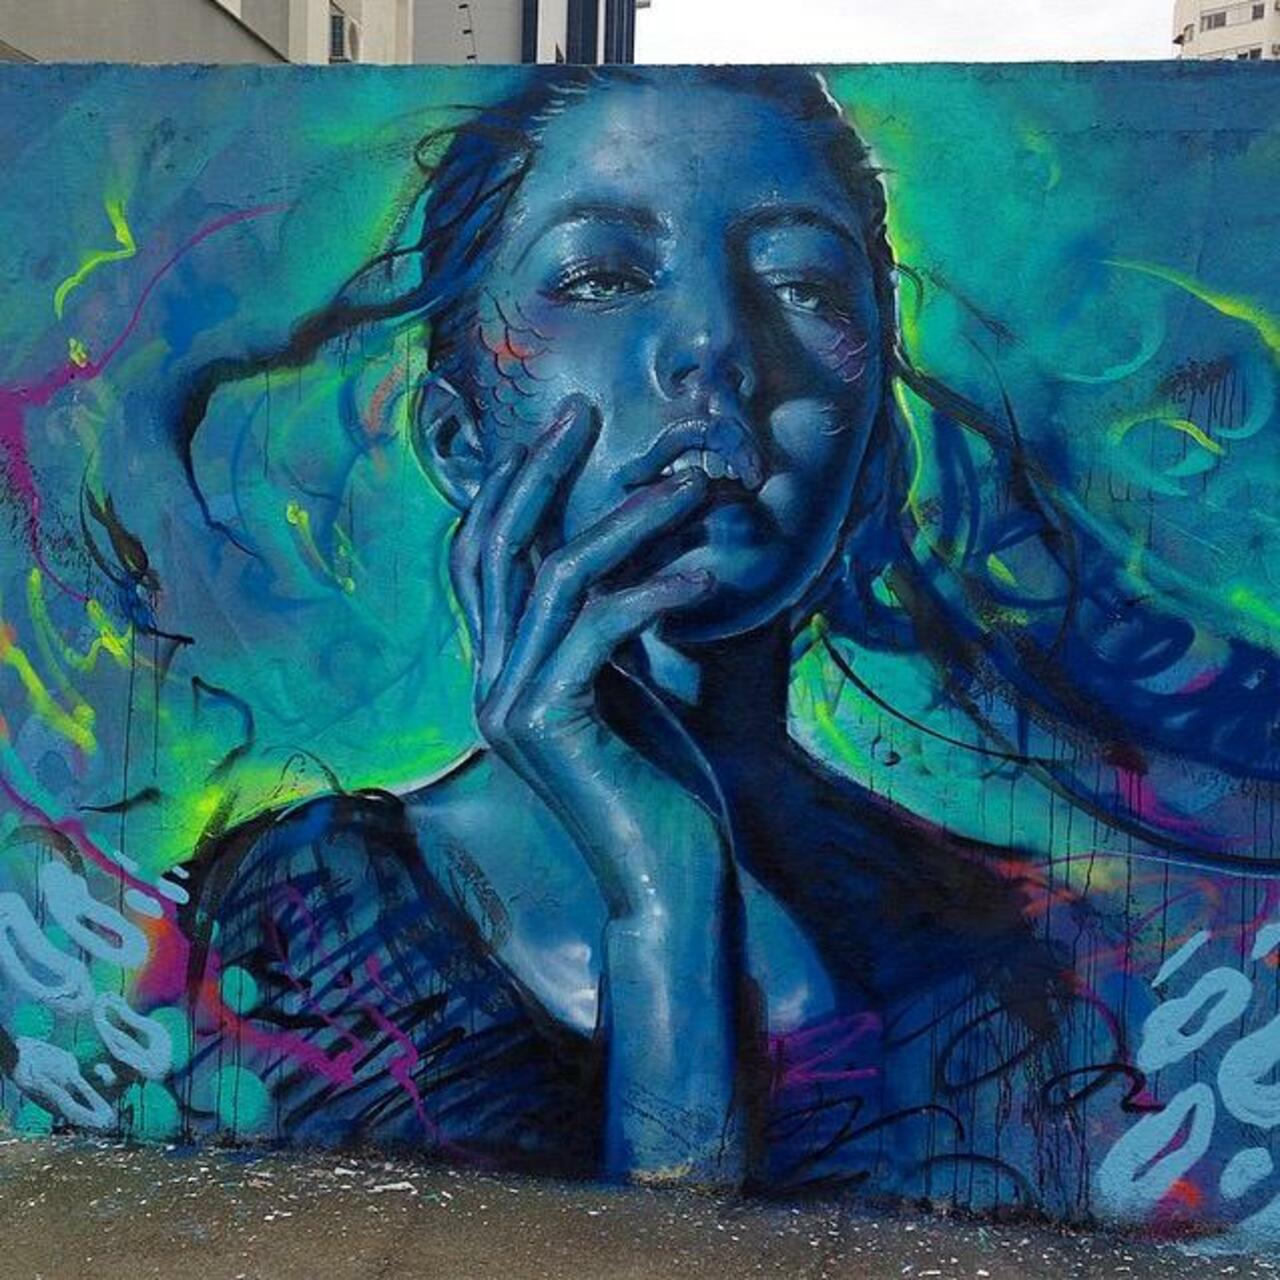 RT @RaySparelli: Thiago Valdi new Street Art piece titled ‘Day Dreamer’

#art #mural #graffiti #streetart http://t.co/toFiFUU7oP